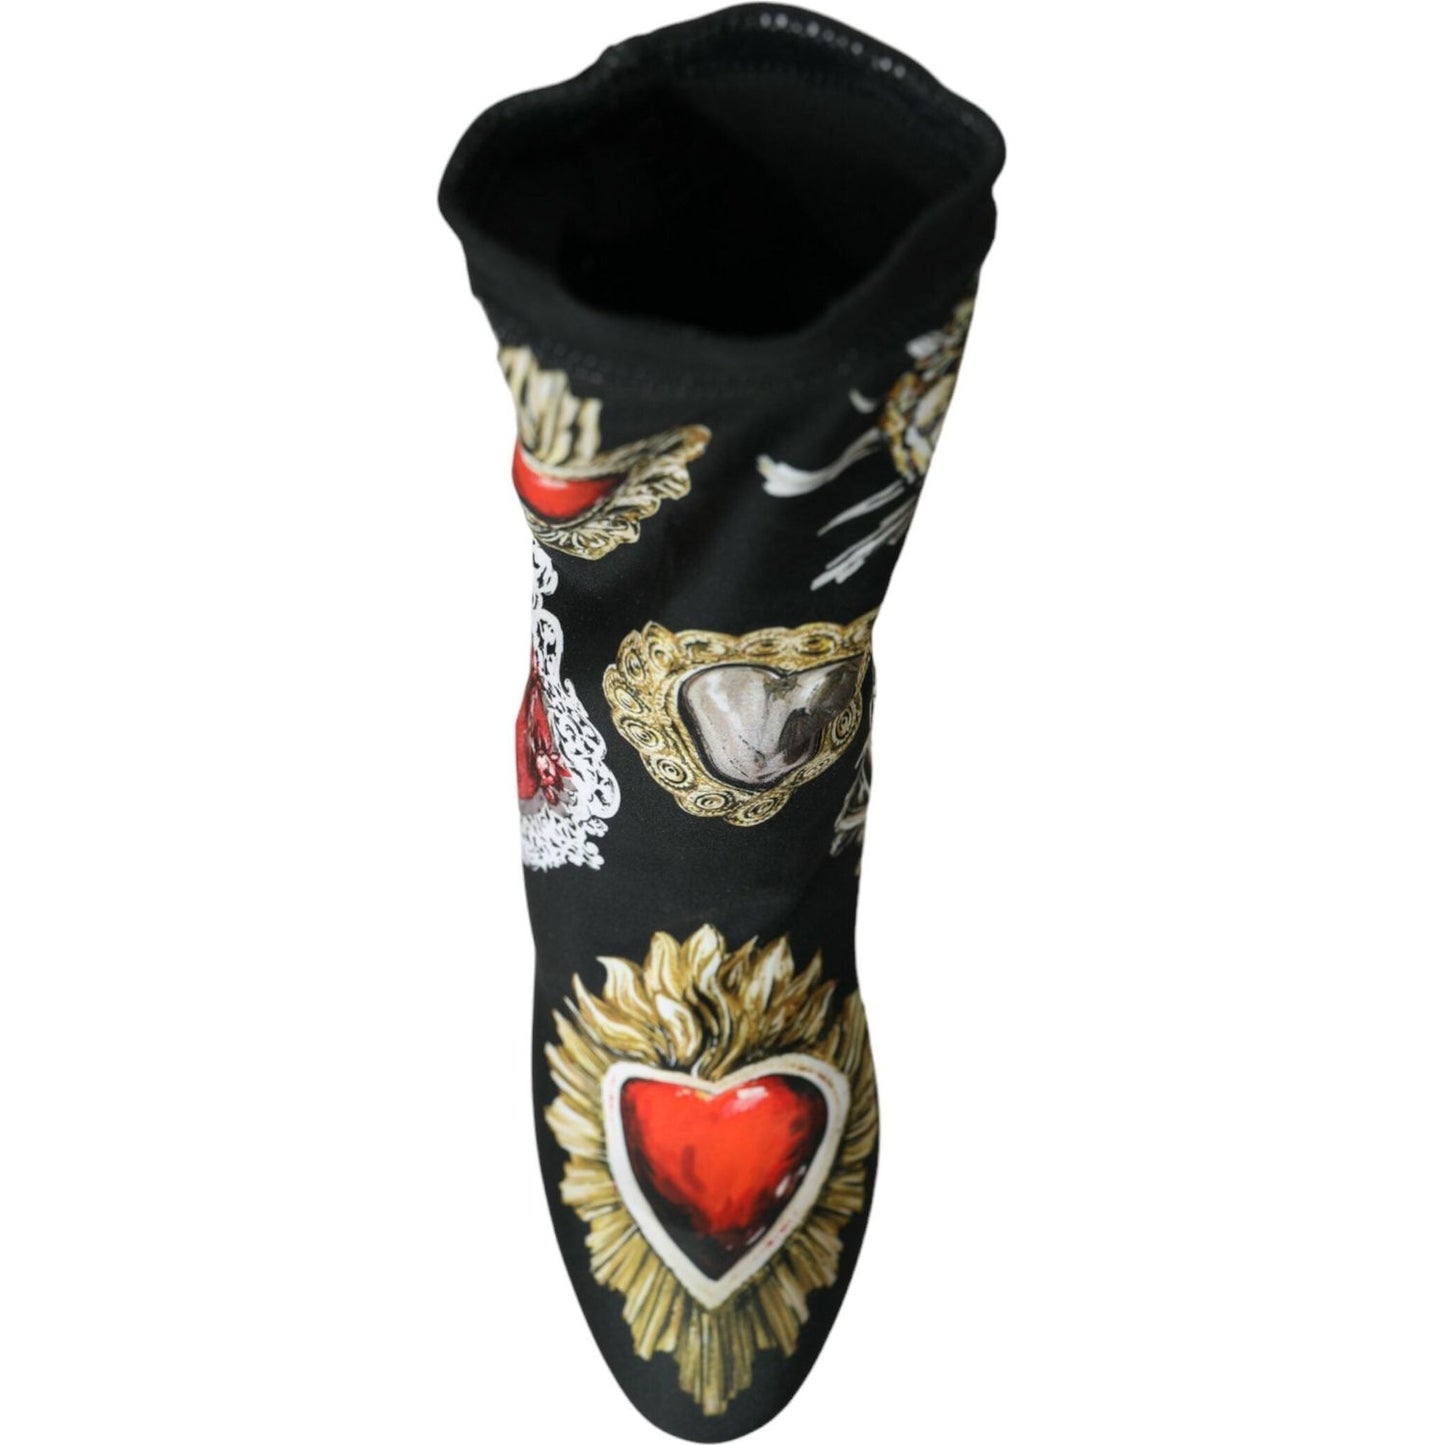 Dolce & Gabbana Black Stretch Socks Red Hearts Booties Shoes black-stretch-socks-red-hearts-booties-shoes